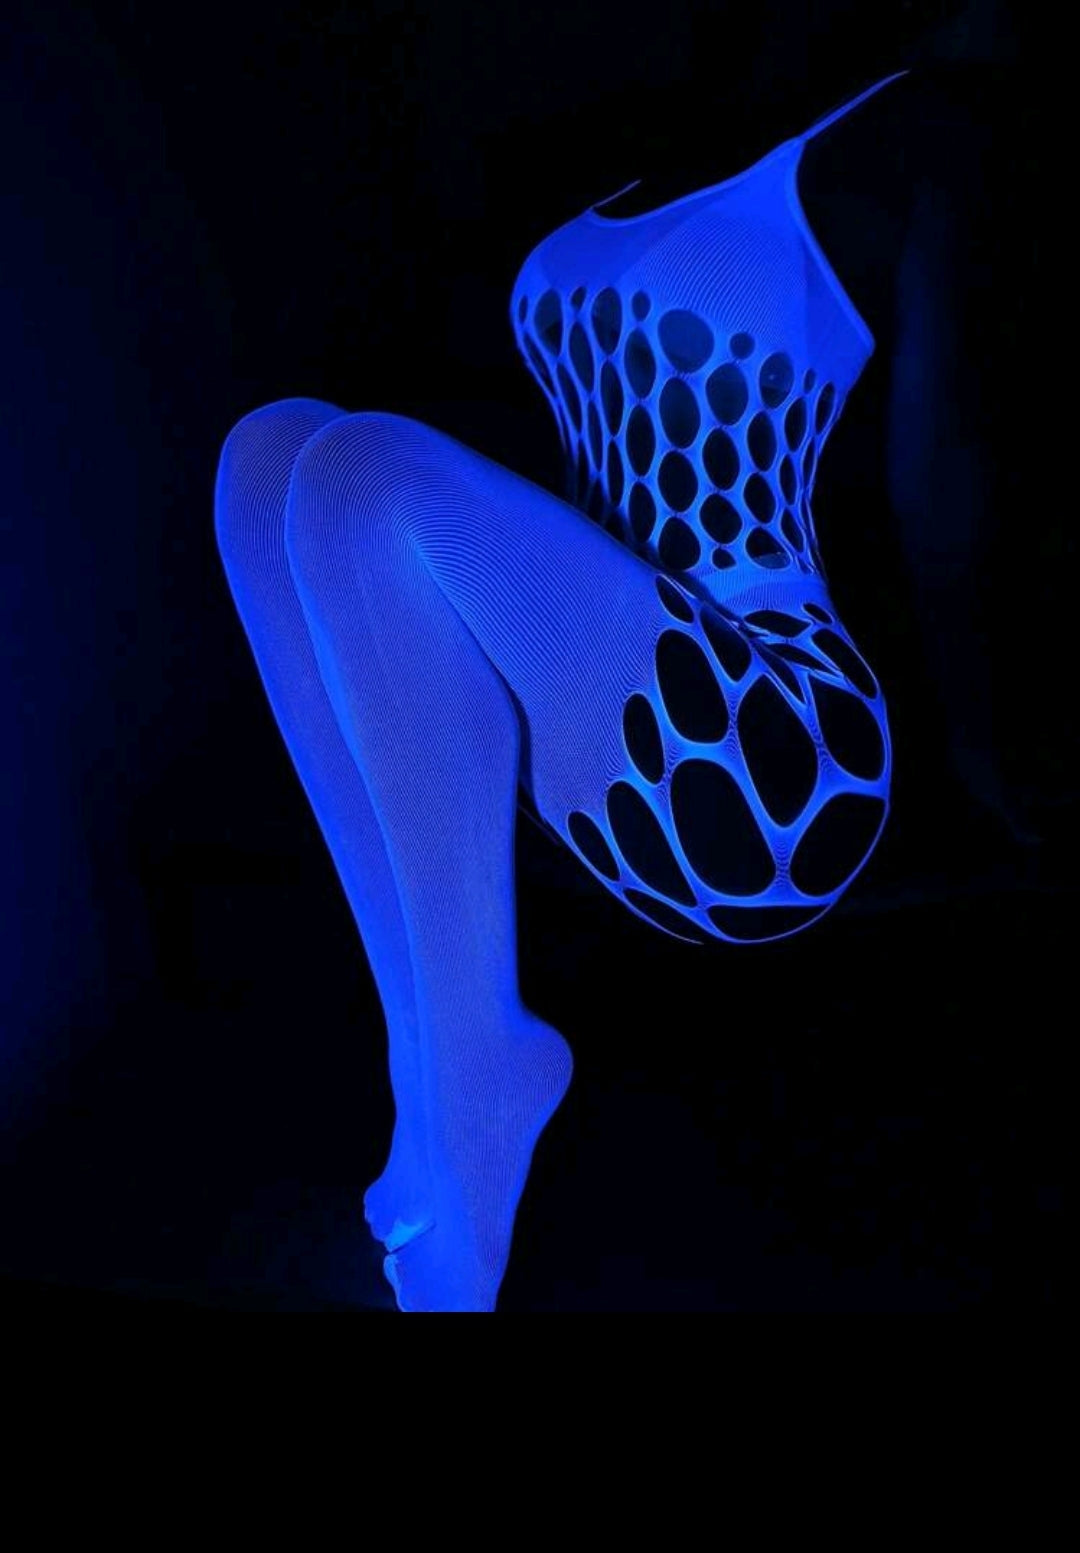 Glowing lingerie